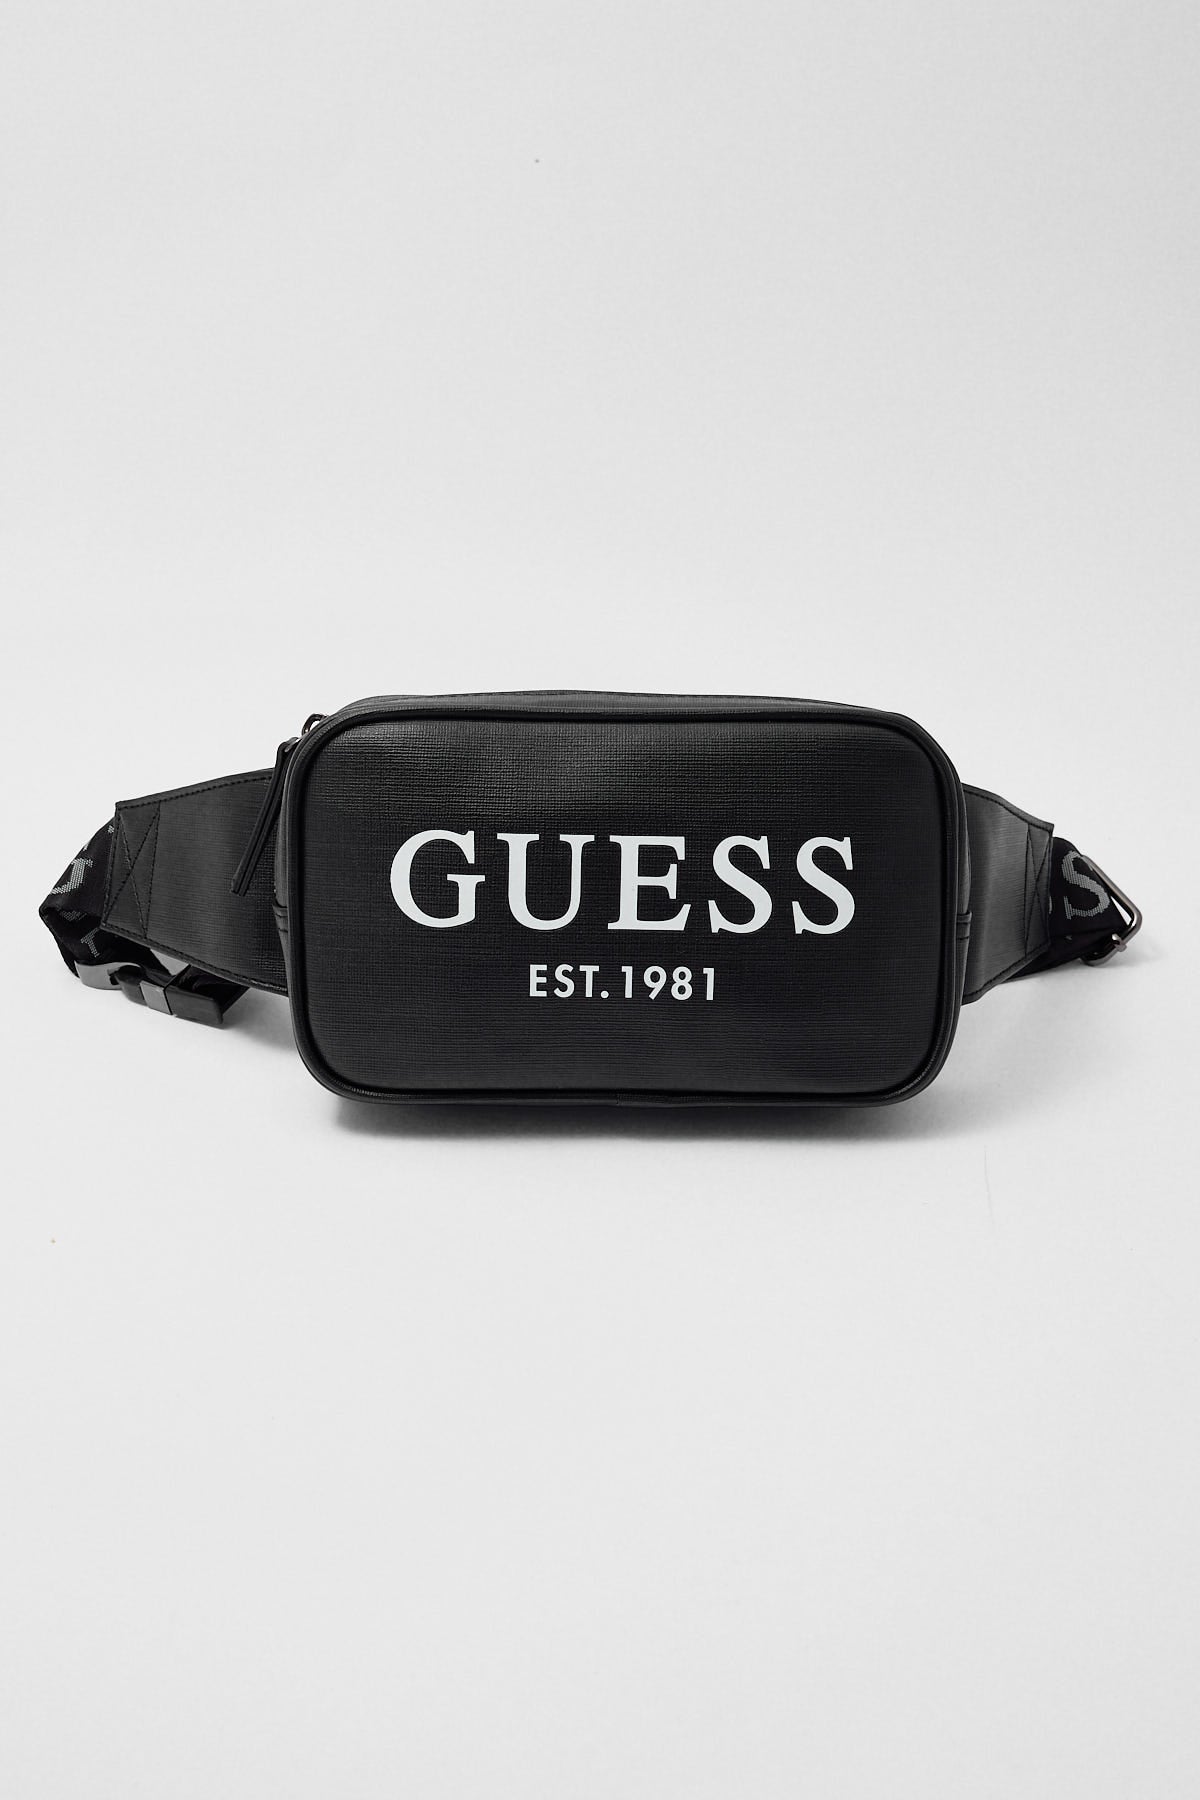 Guess Originals Outfitter Bum Bag Black